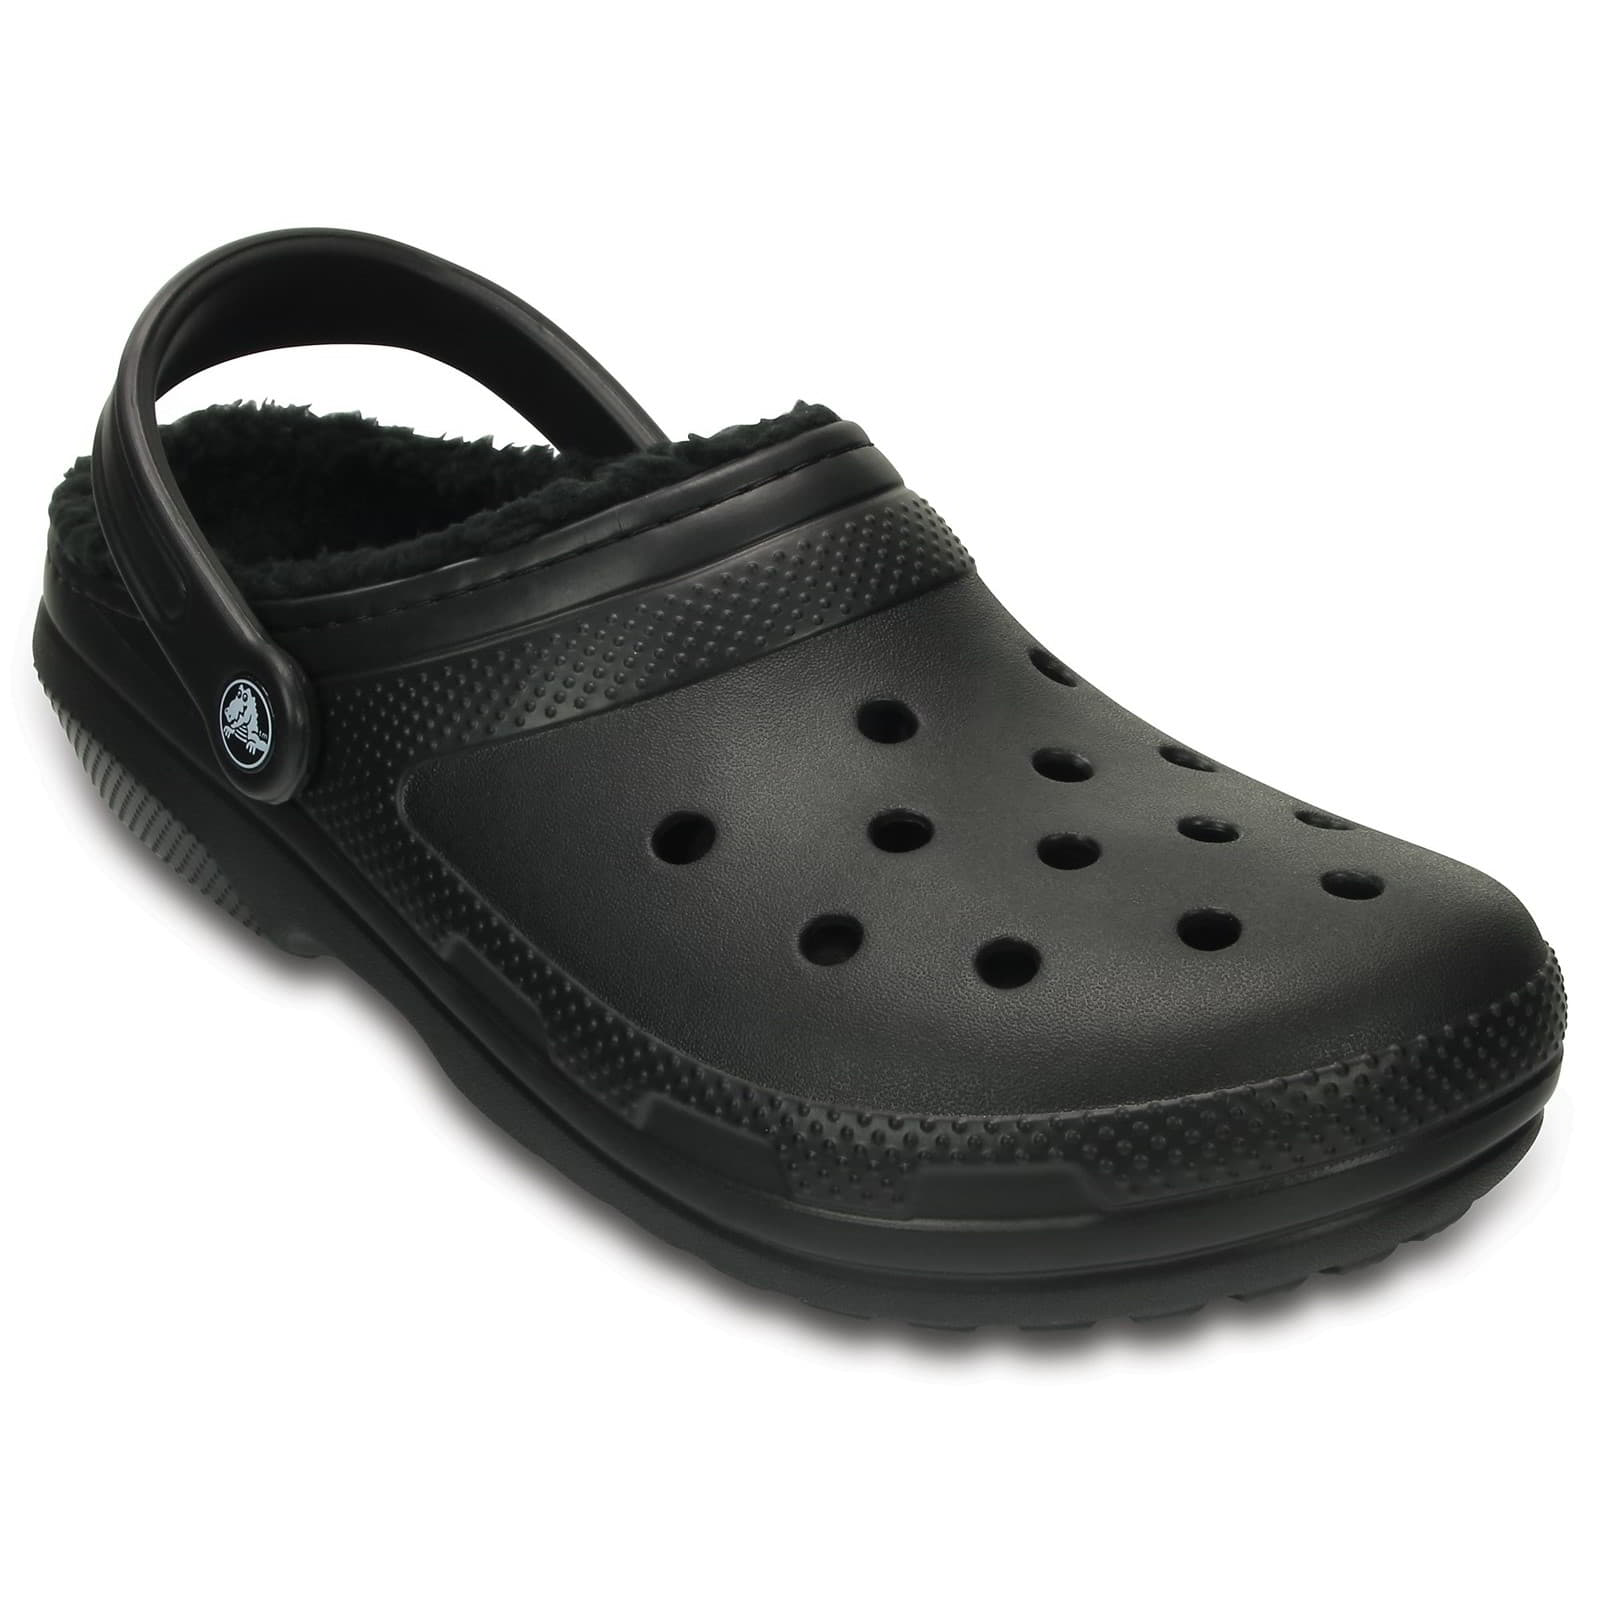 Crocs Men's Women's Classic Lined Clogs Slip On Slippers Shoes - UK 10